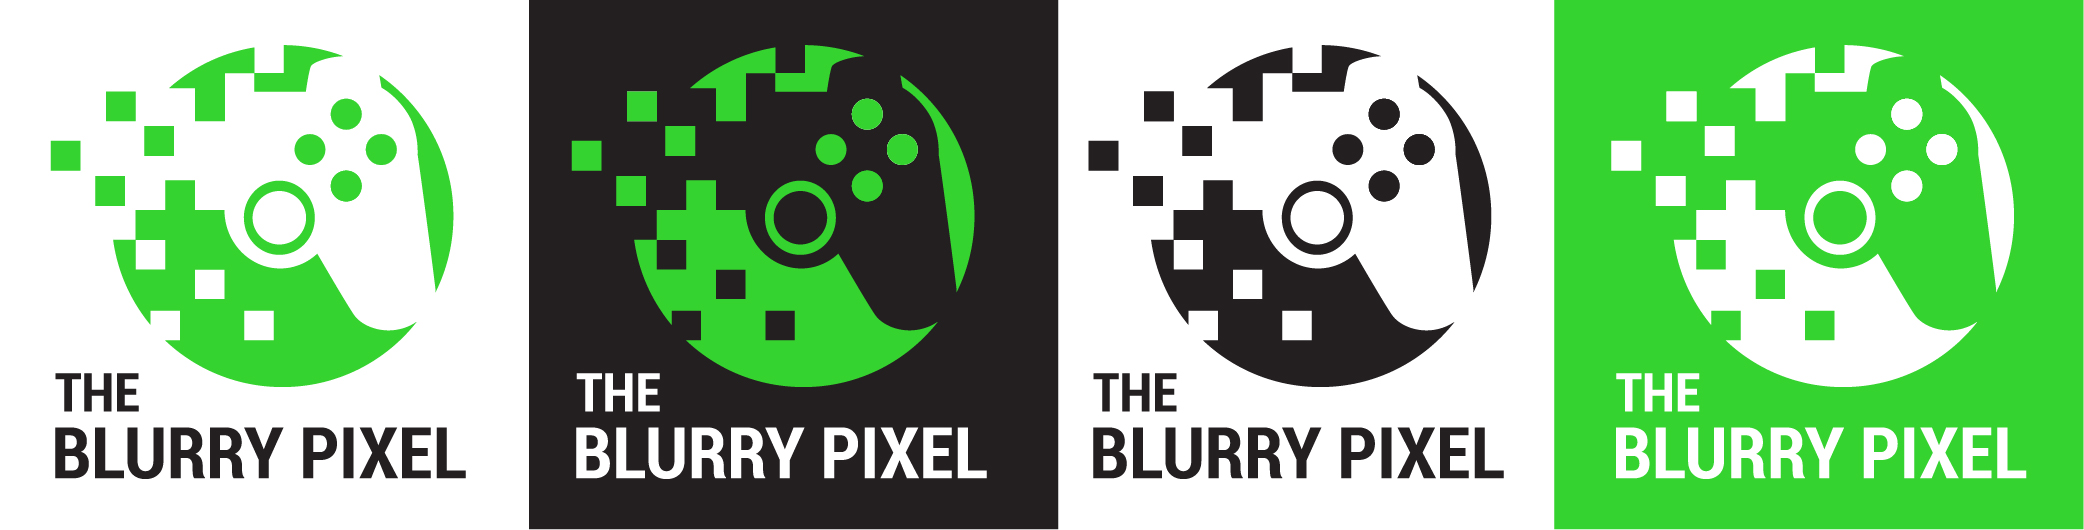 Blurry Pixel variations